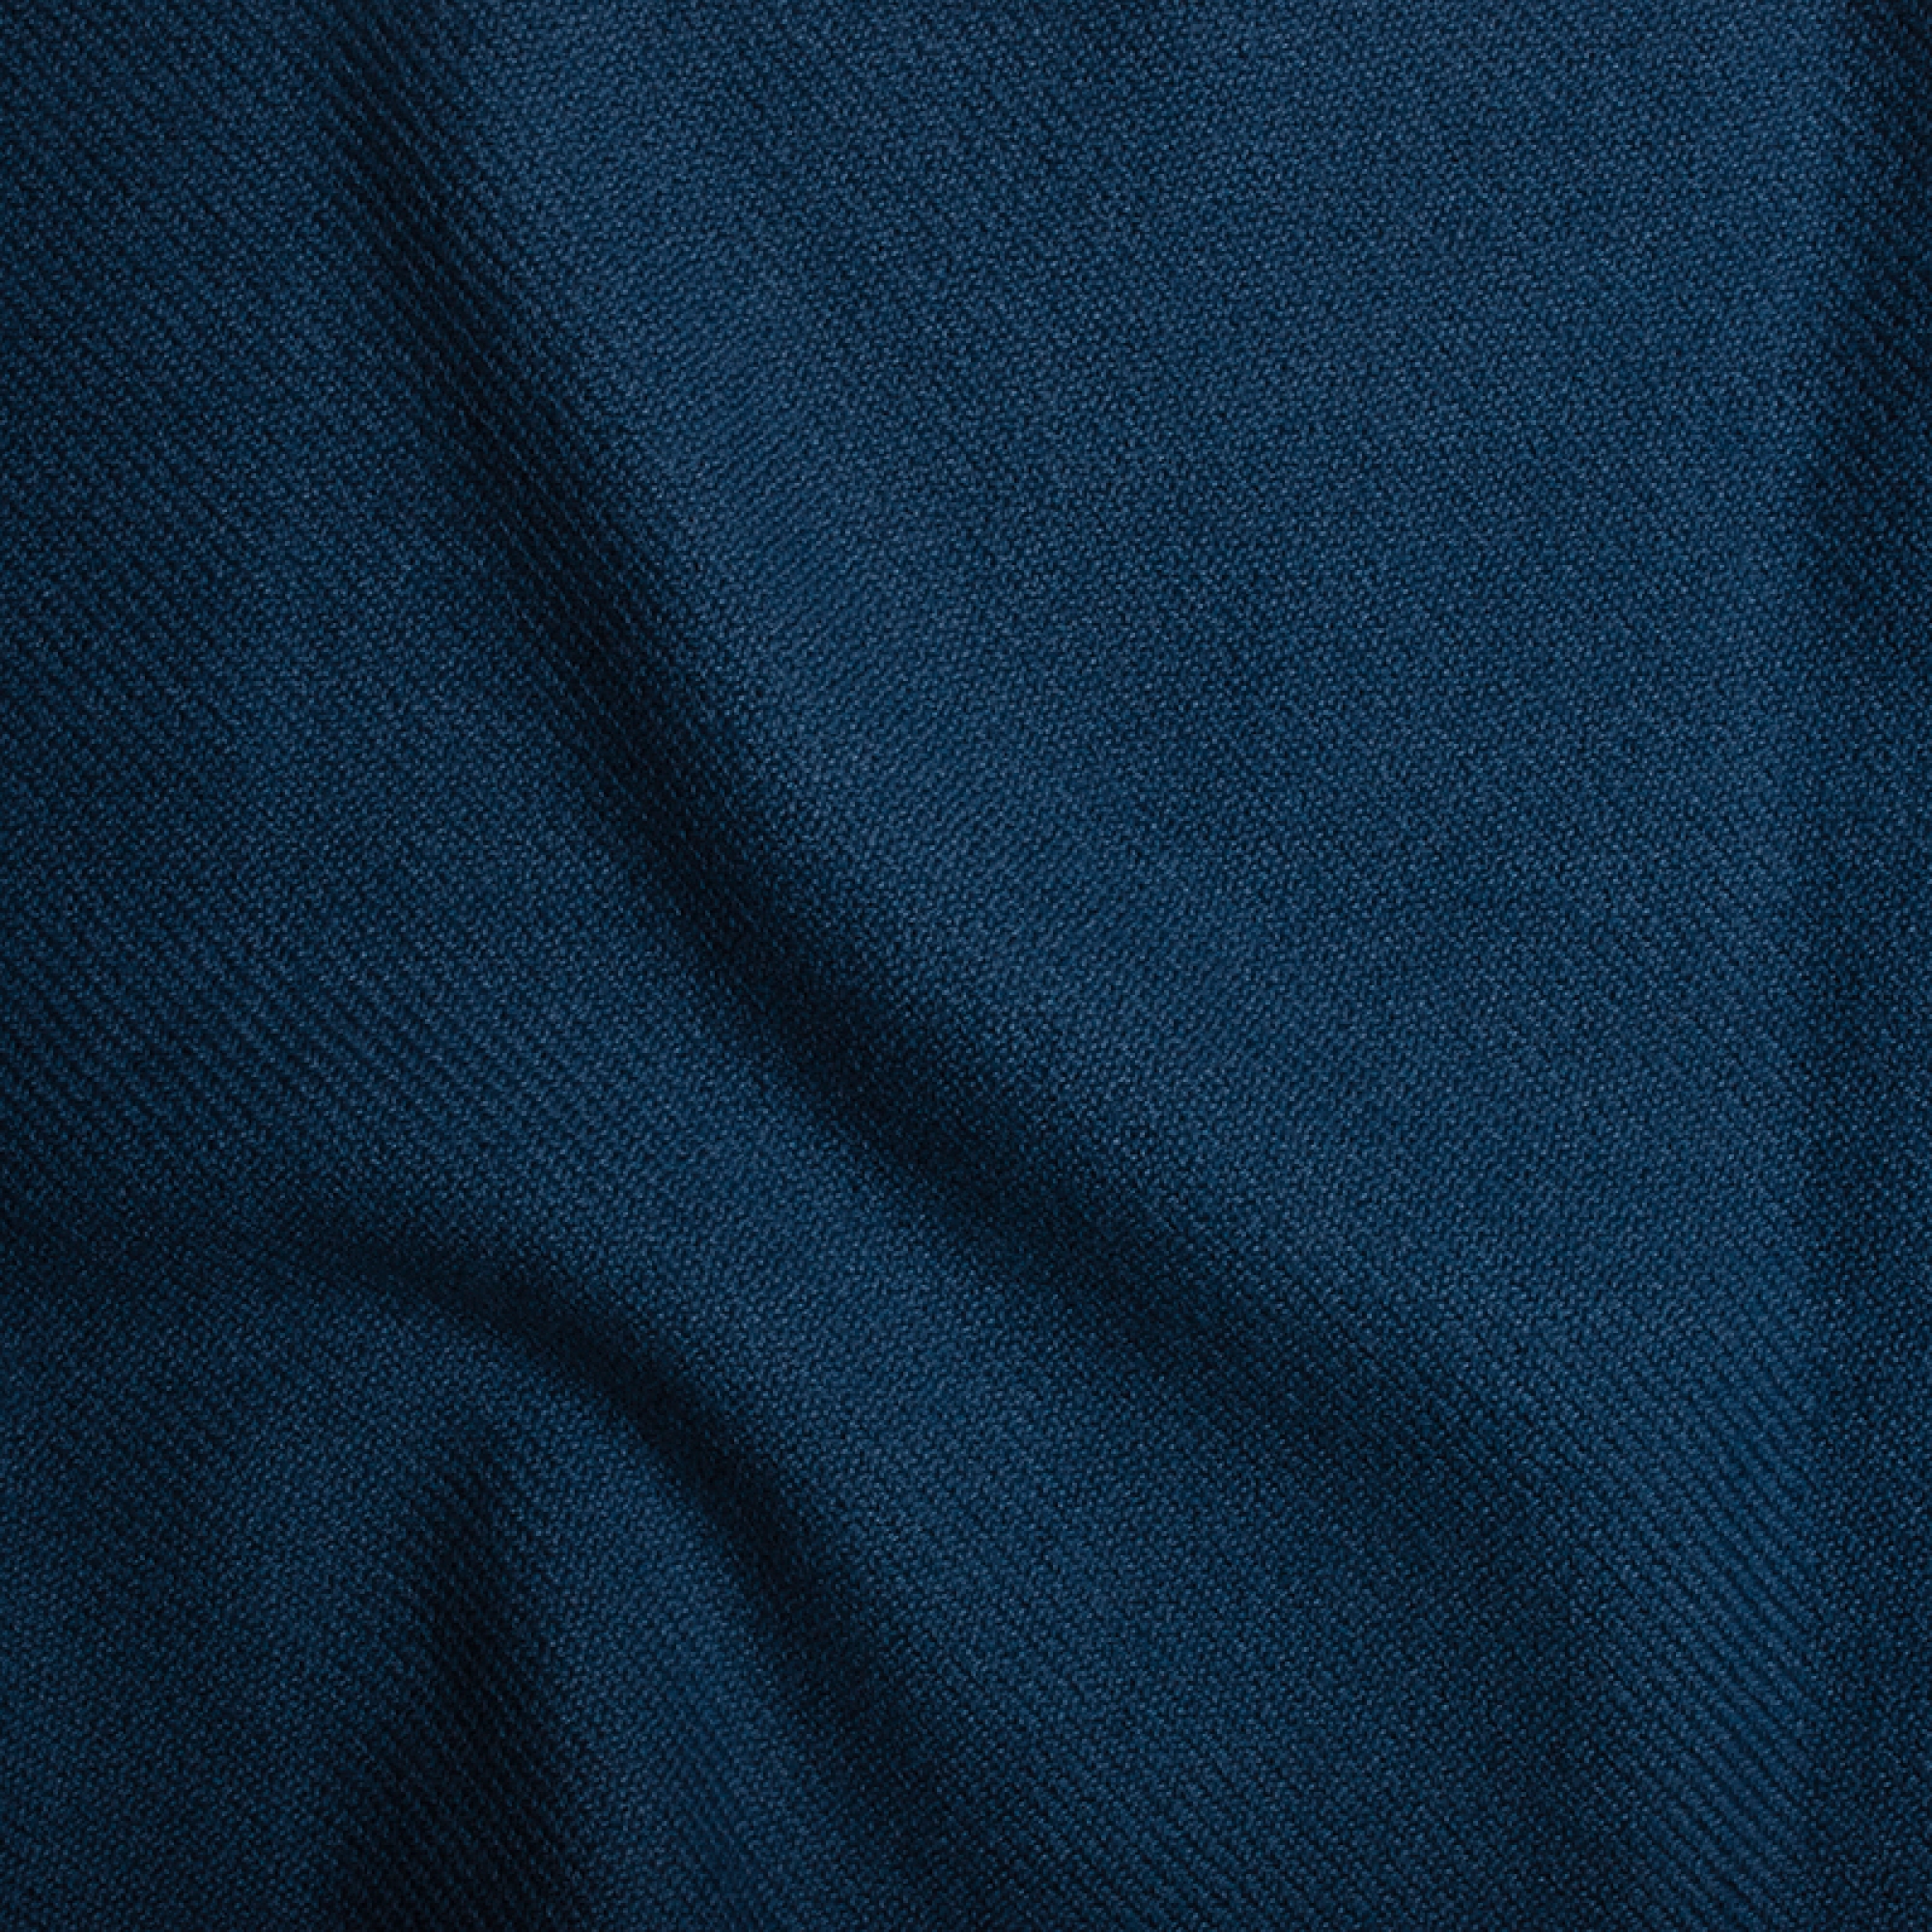 Cachemire pull femme toodoo plain m 180 x 220 bleu prusse 180 x 220 cm